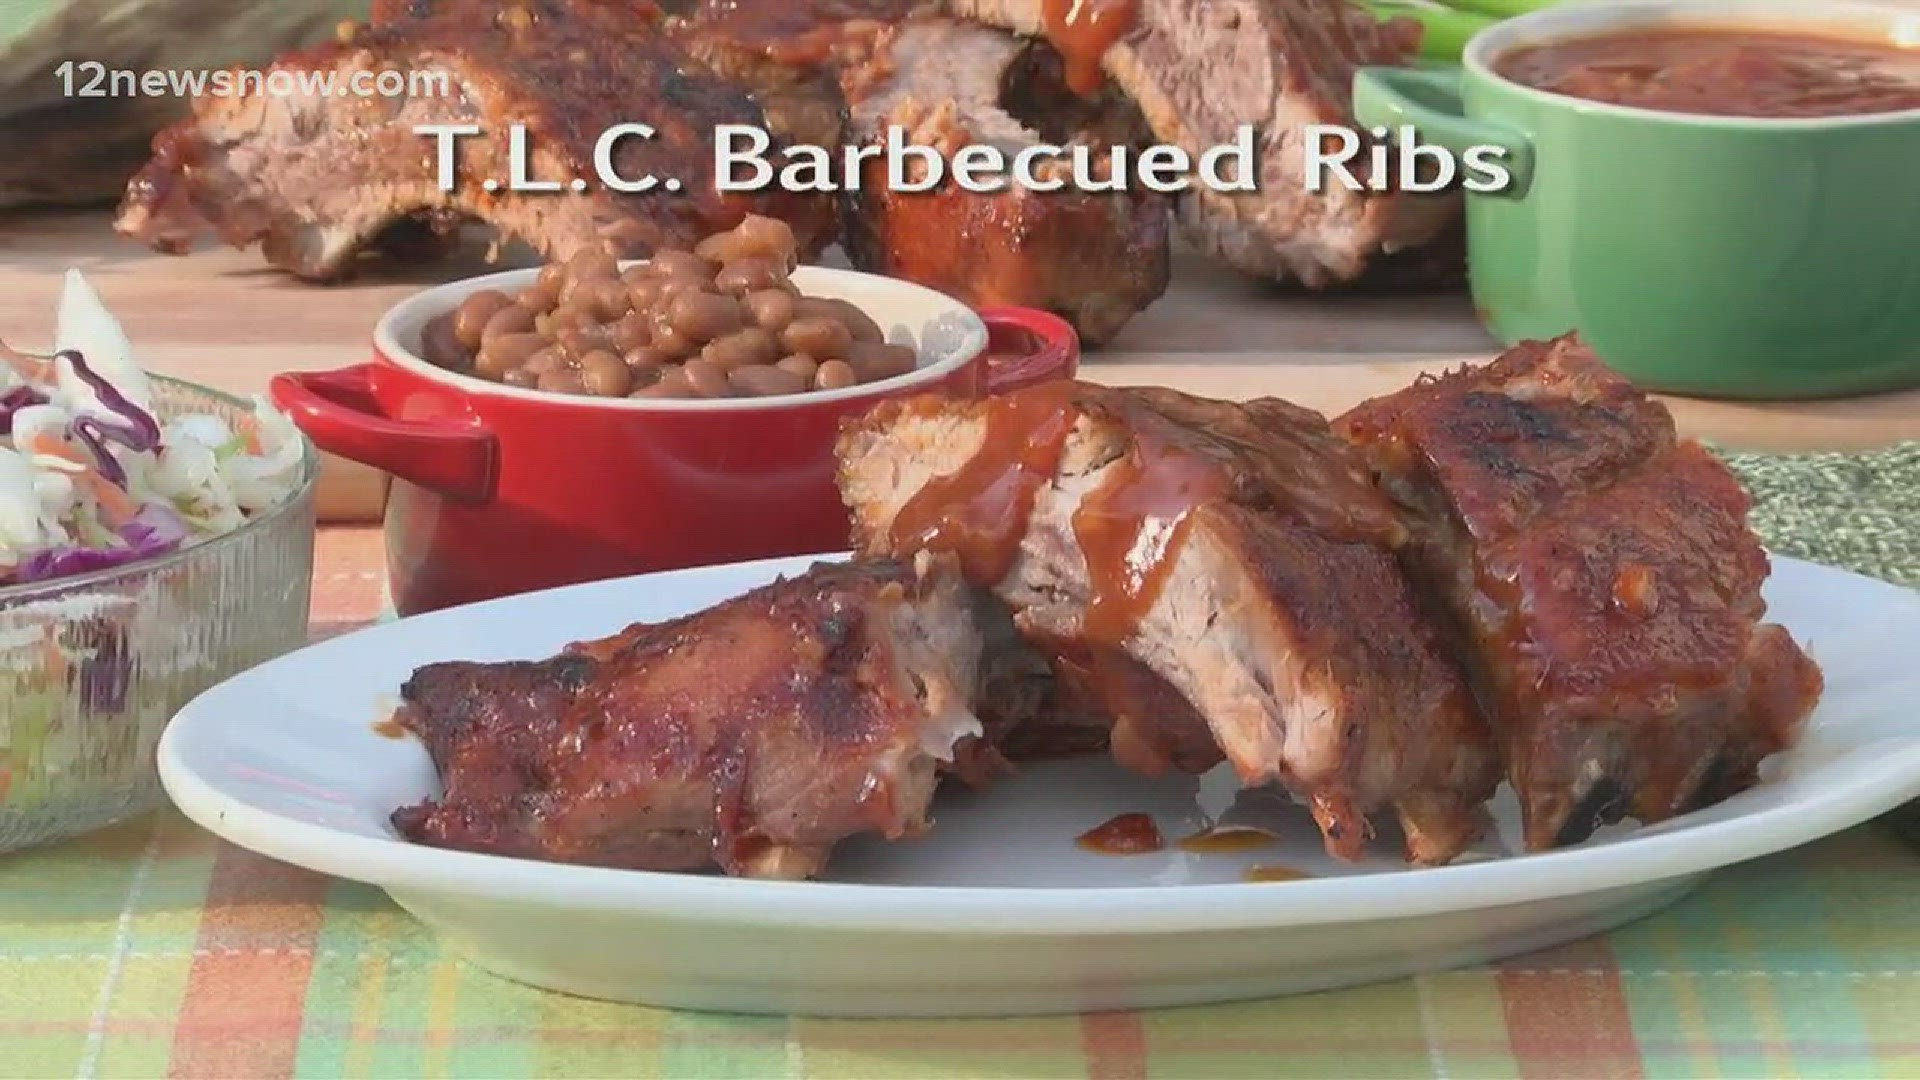 Mr. Food makes 'T.L.C. Barbecued Ribs'